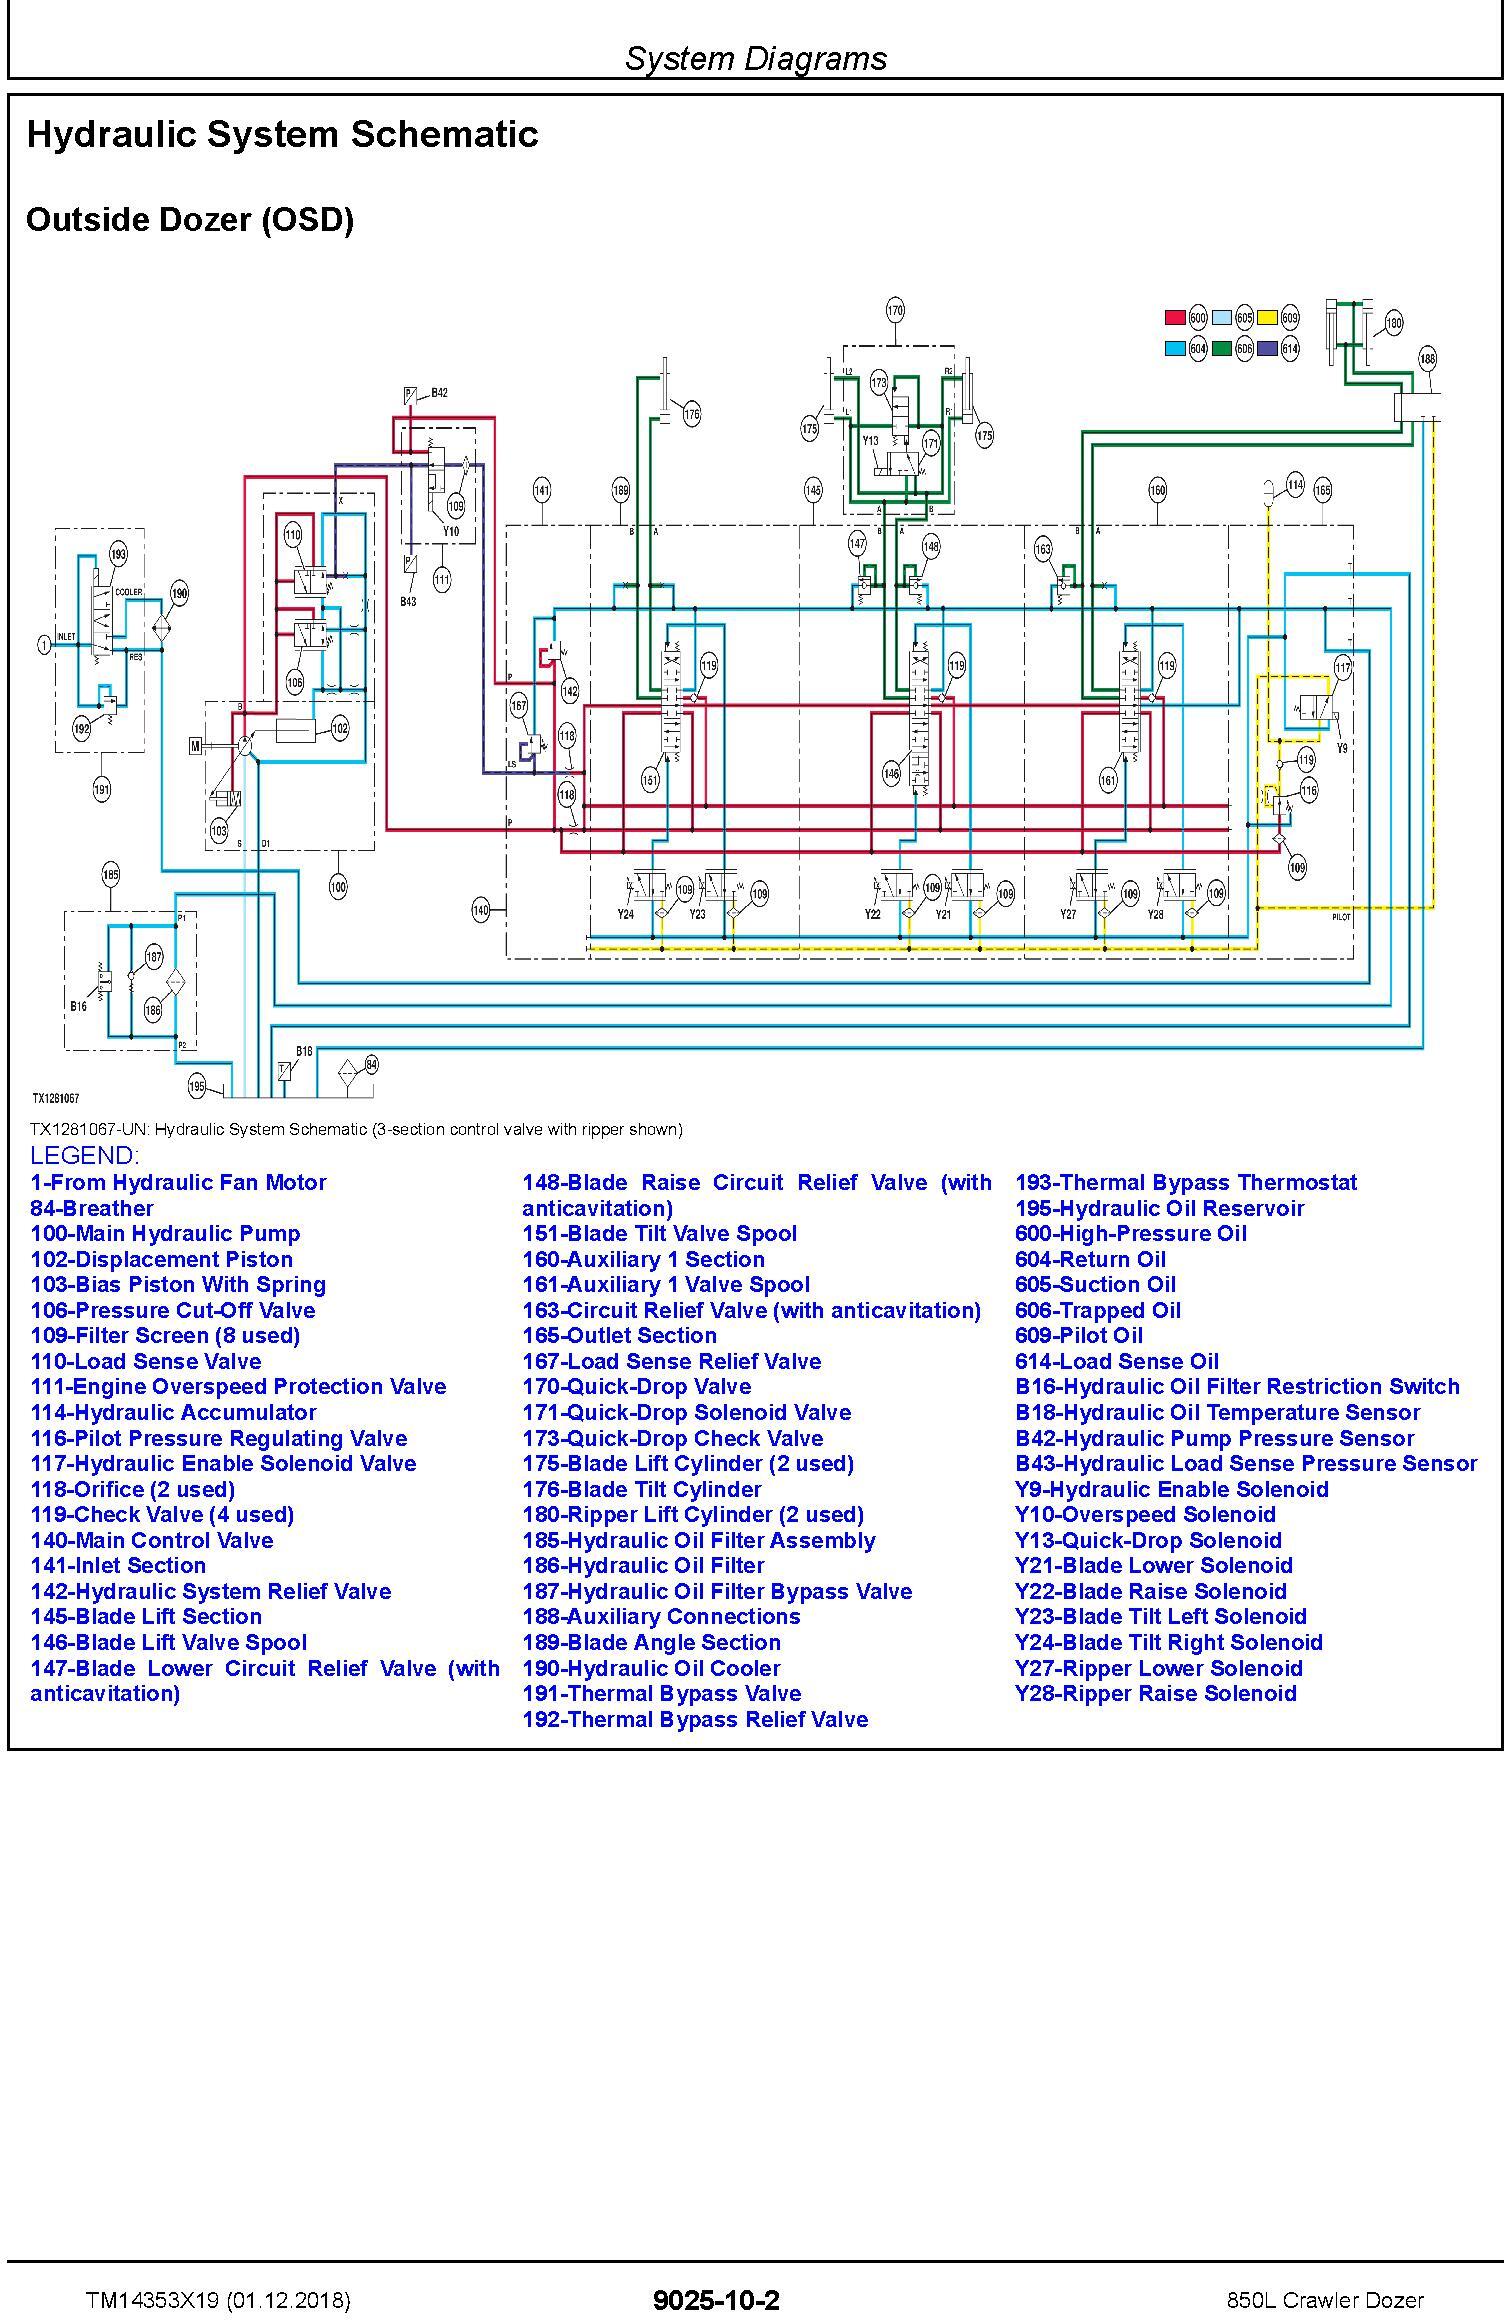 John Deere 850L Crawler Dozer Operation & Test Technical Manual (TM14353X19) - 2